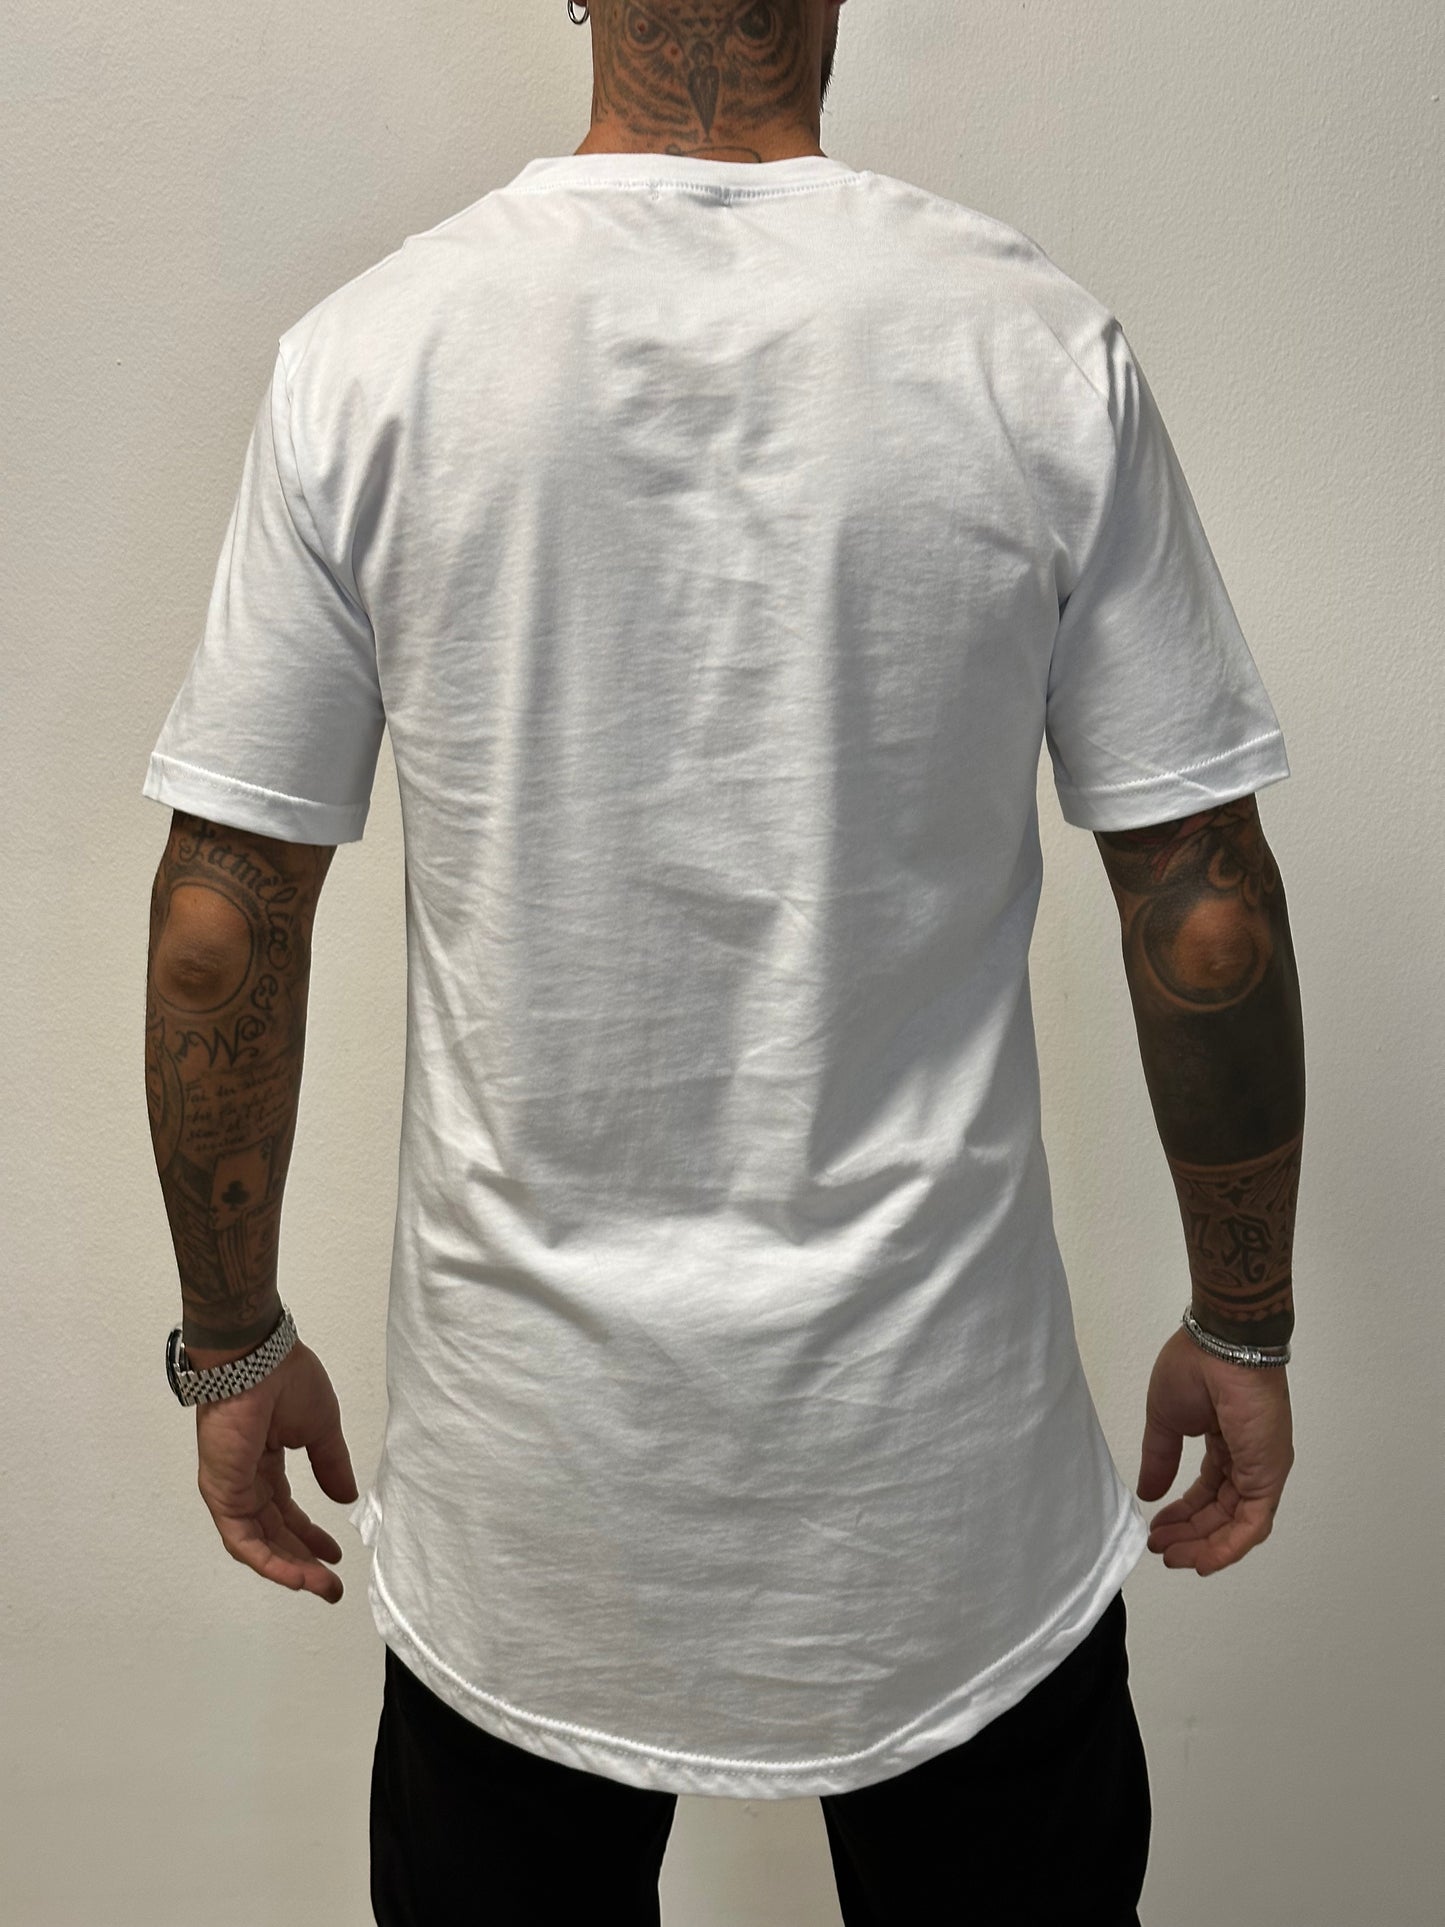 T-shirt over a taglie bianca